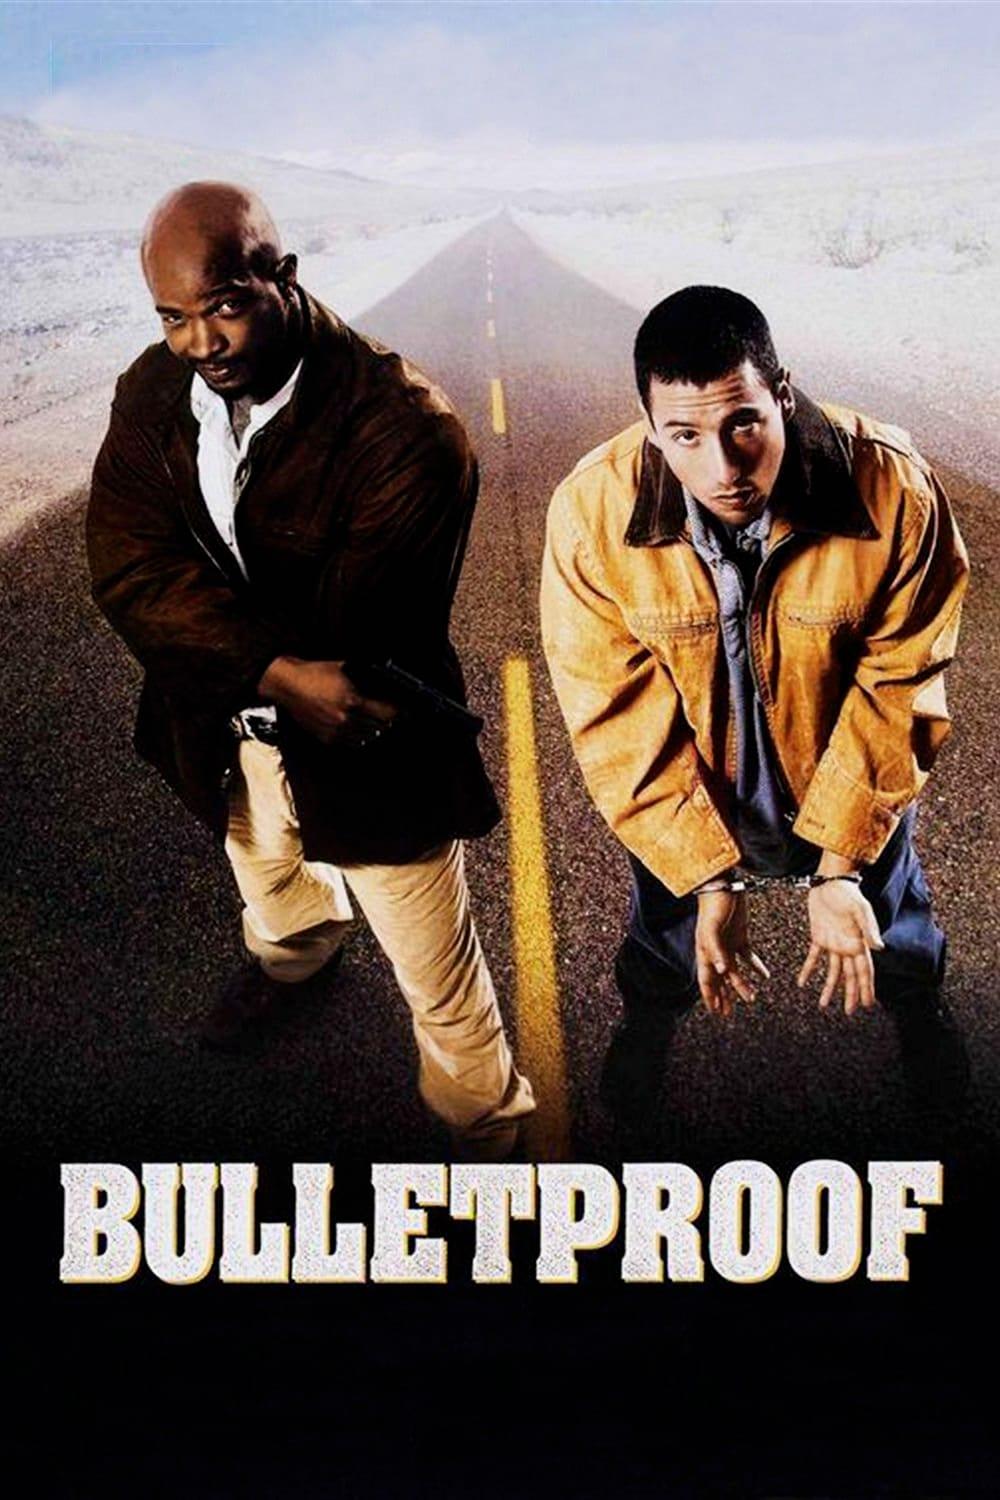 Bulletproof poster